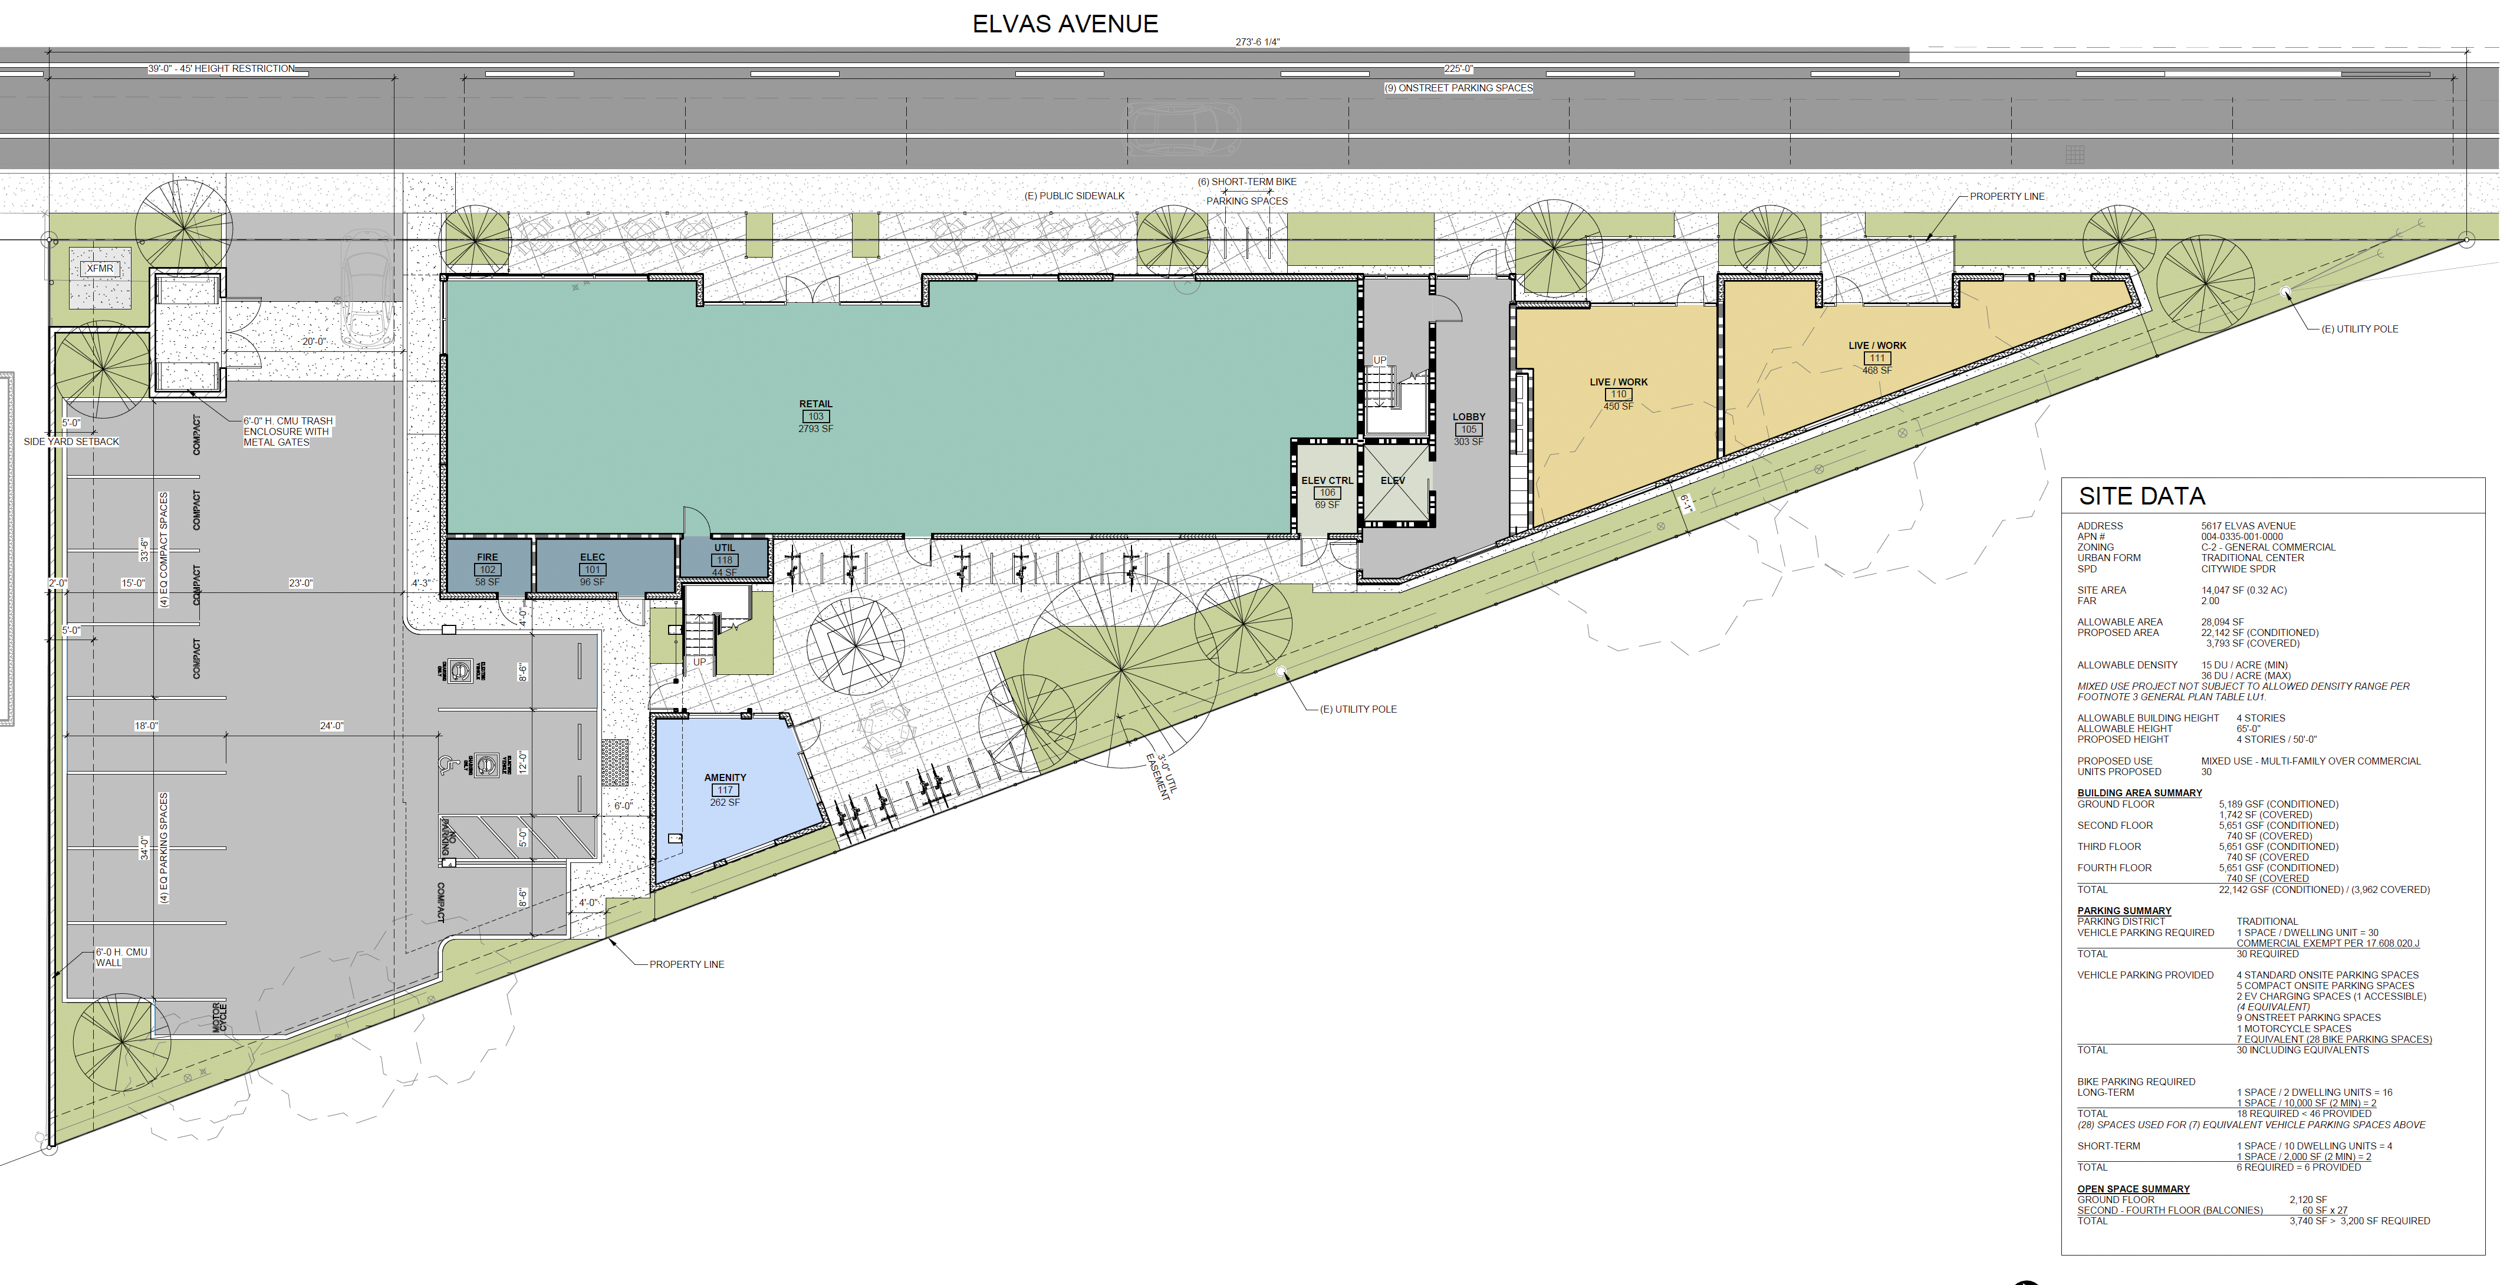 5617 Elvas Avenue ground-level floor plan, illustration by Ellis Architects